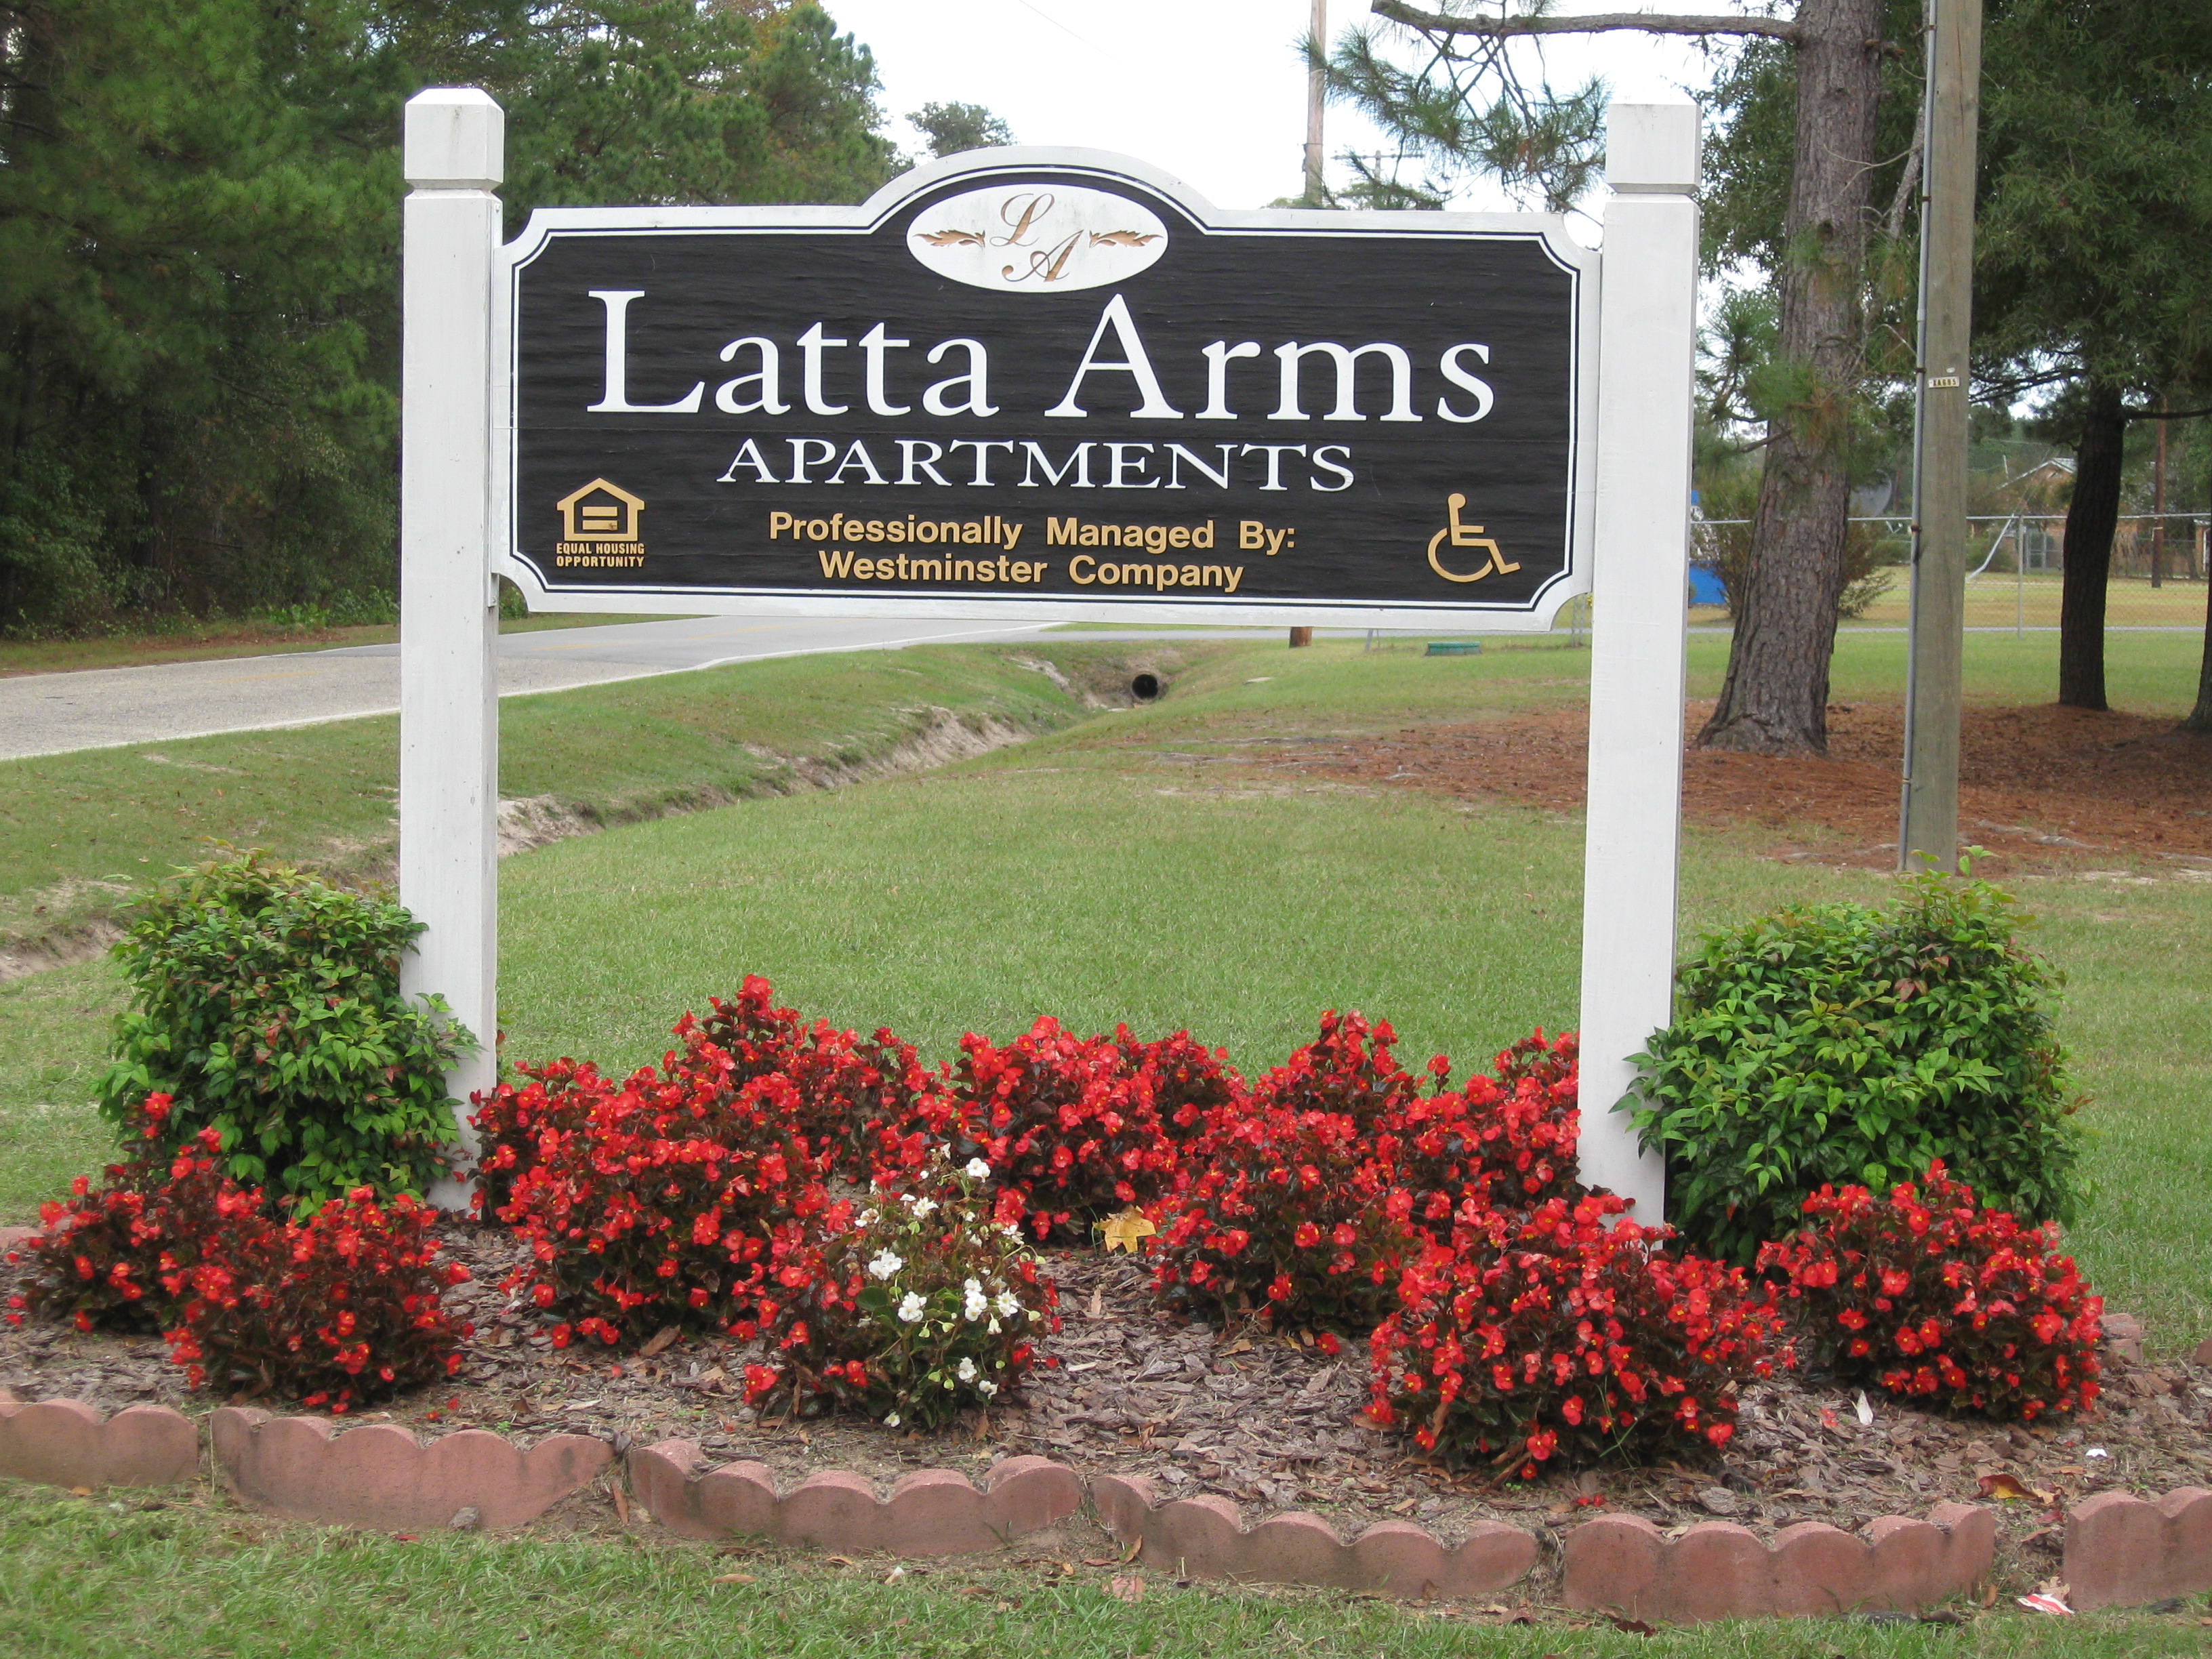 LATTA ARMS APARTMENTS